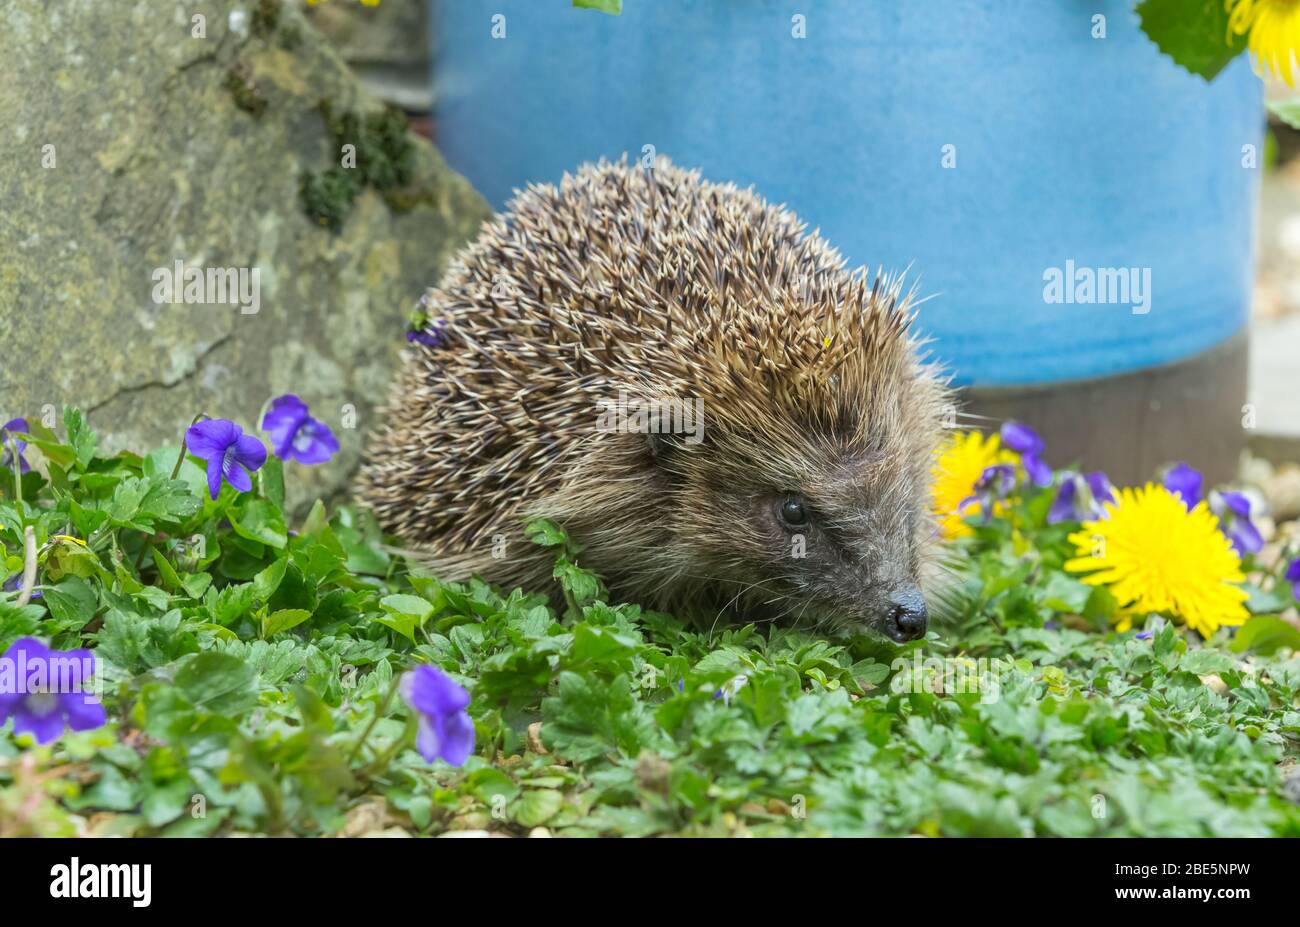 Hedgehog (Scientific name: Erinaceus Europaeus). Close up of a wild, native, European hedgehog in Springtime.Facing right with blue plantpot & violets Stock Photo